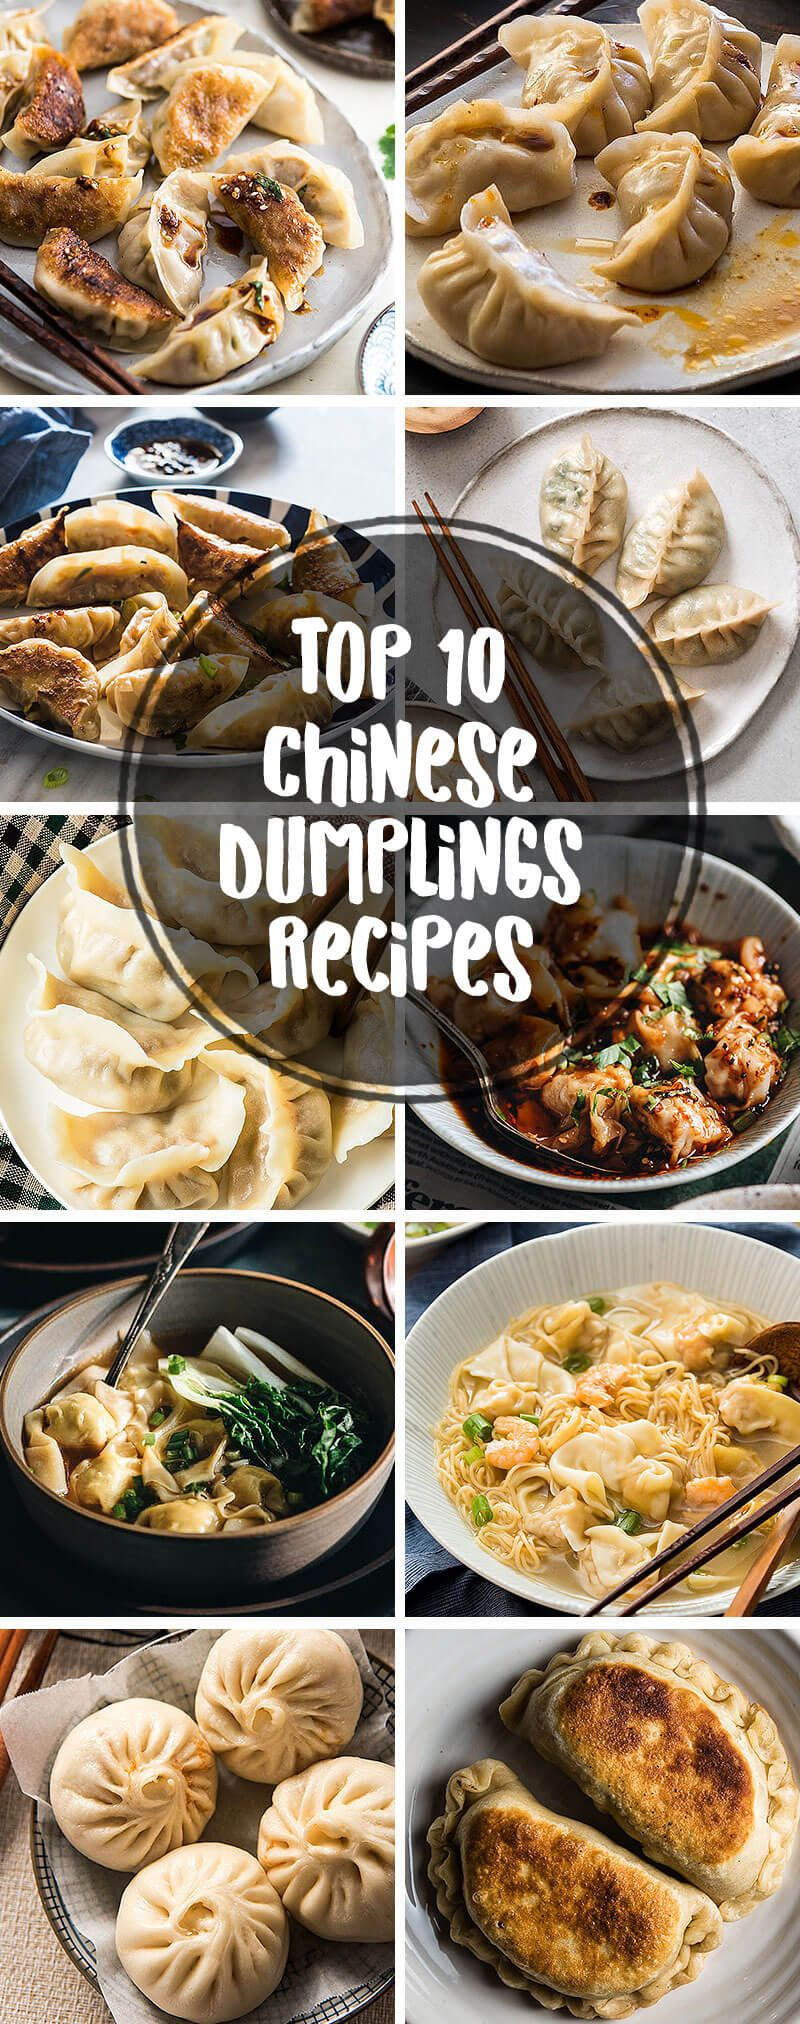 Chinese New Year Dumplings Recipe
 Top 10 Chinese Dumplings Recipes for Chinese New Year